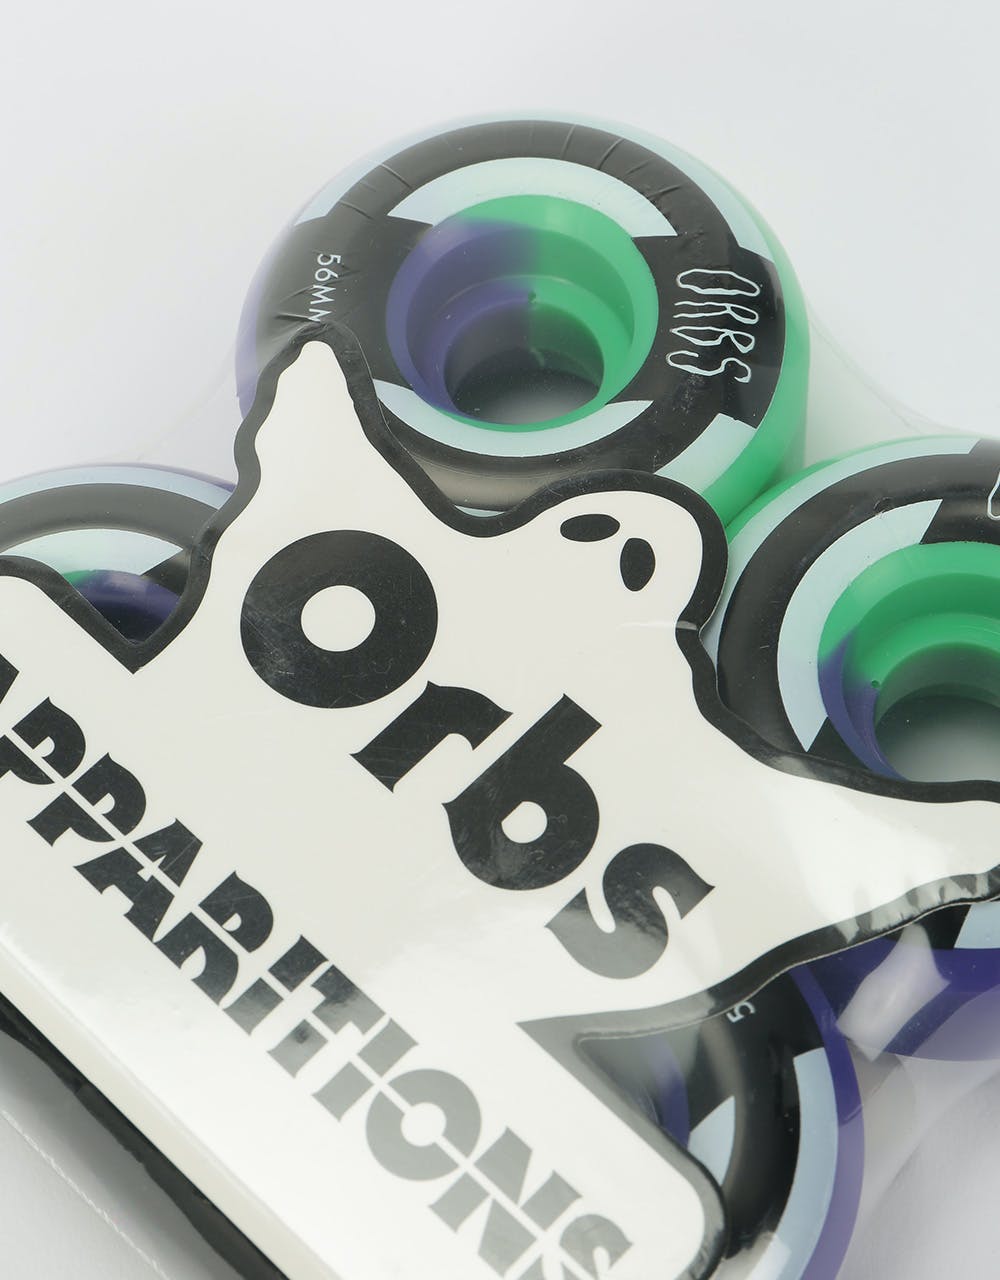 Orbs Apparitions Splits 99a Skateboard Wheel - 56mm